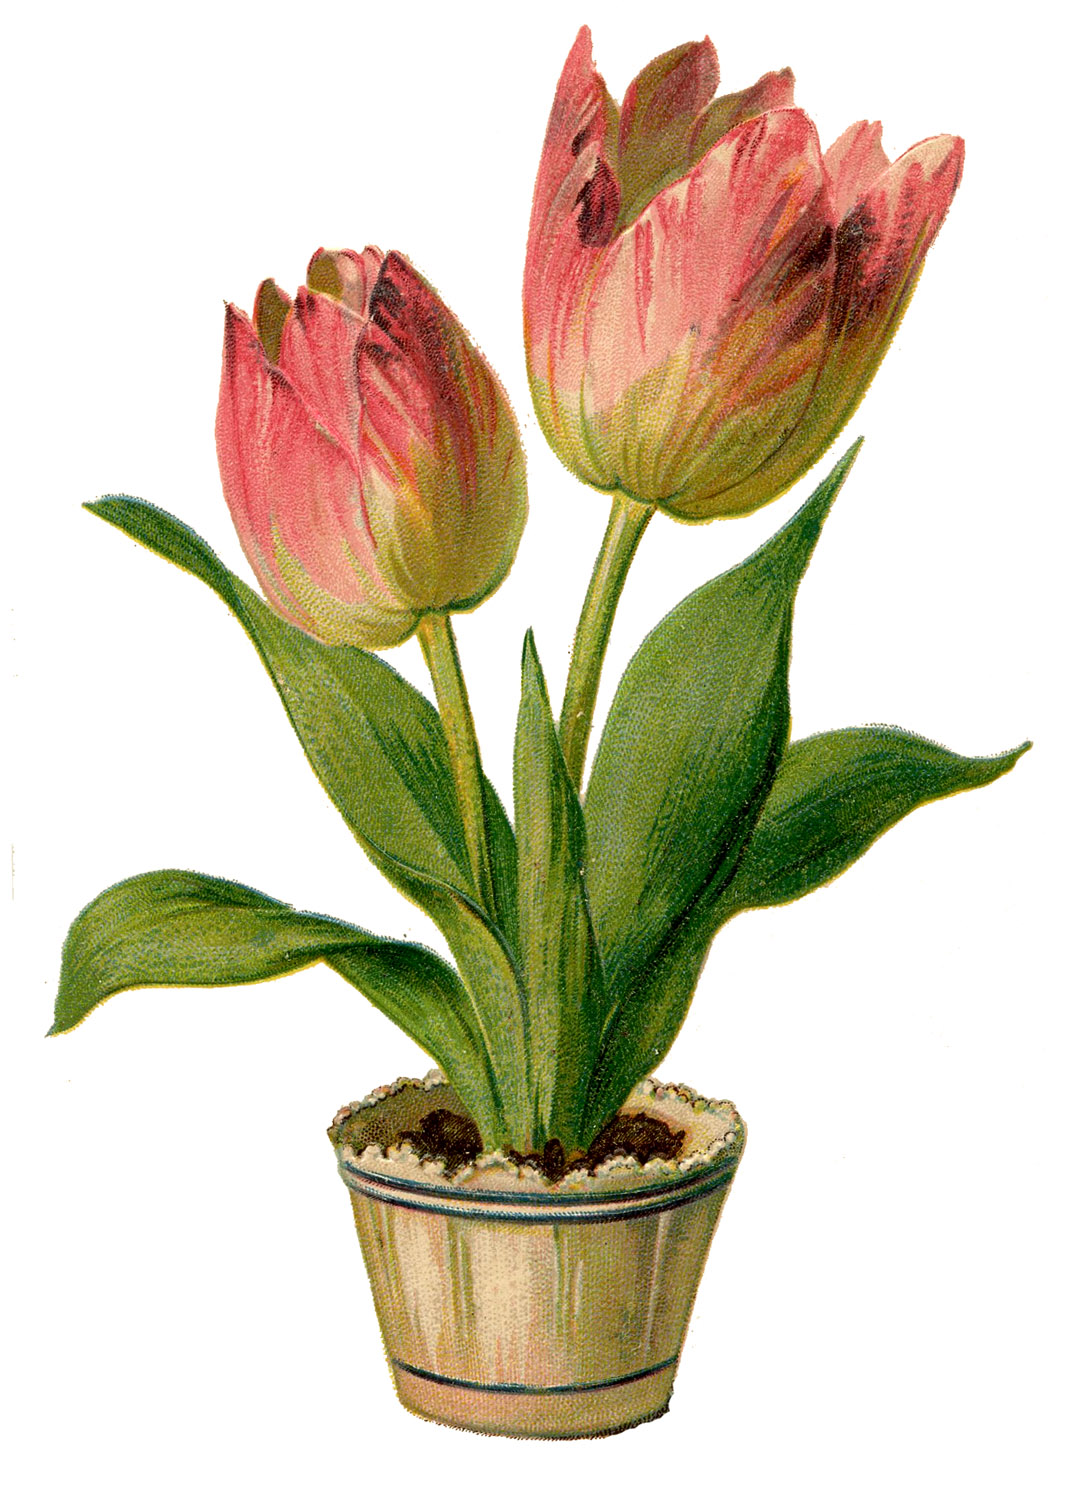 http://thegraphicsfairy.com/wp-content/uploads/2013/05/Tulips-Pink-GraphicsFairy1.jpg